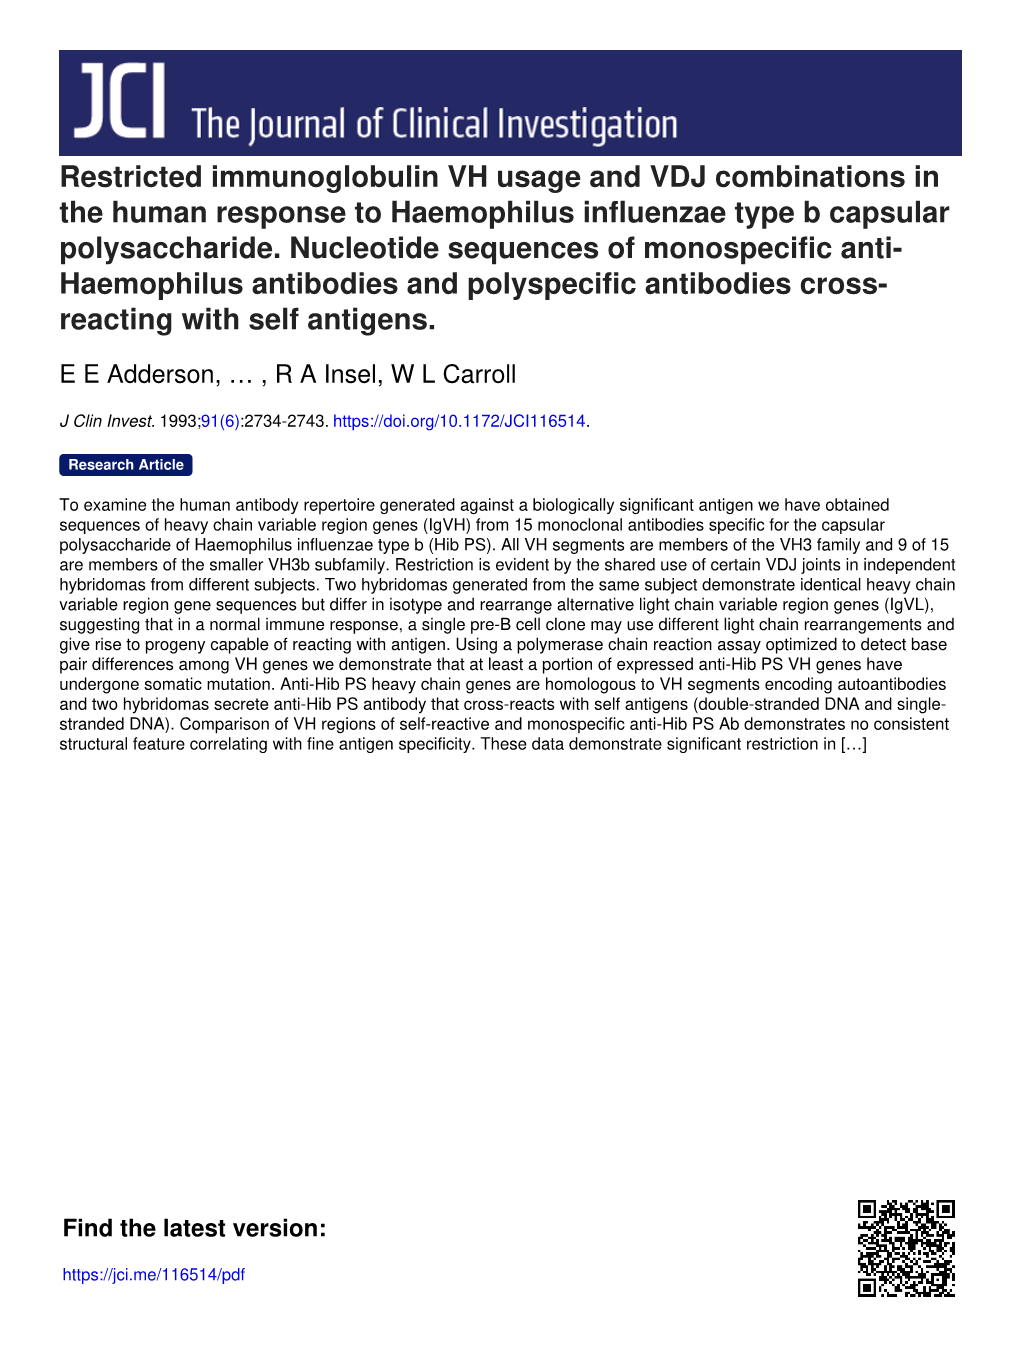 Restricted Immunoglobulin VH Usage and VDJ Combinations in the Human Response to Haemophilus Influenzae Type B Capsular Polysaccharide